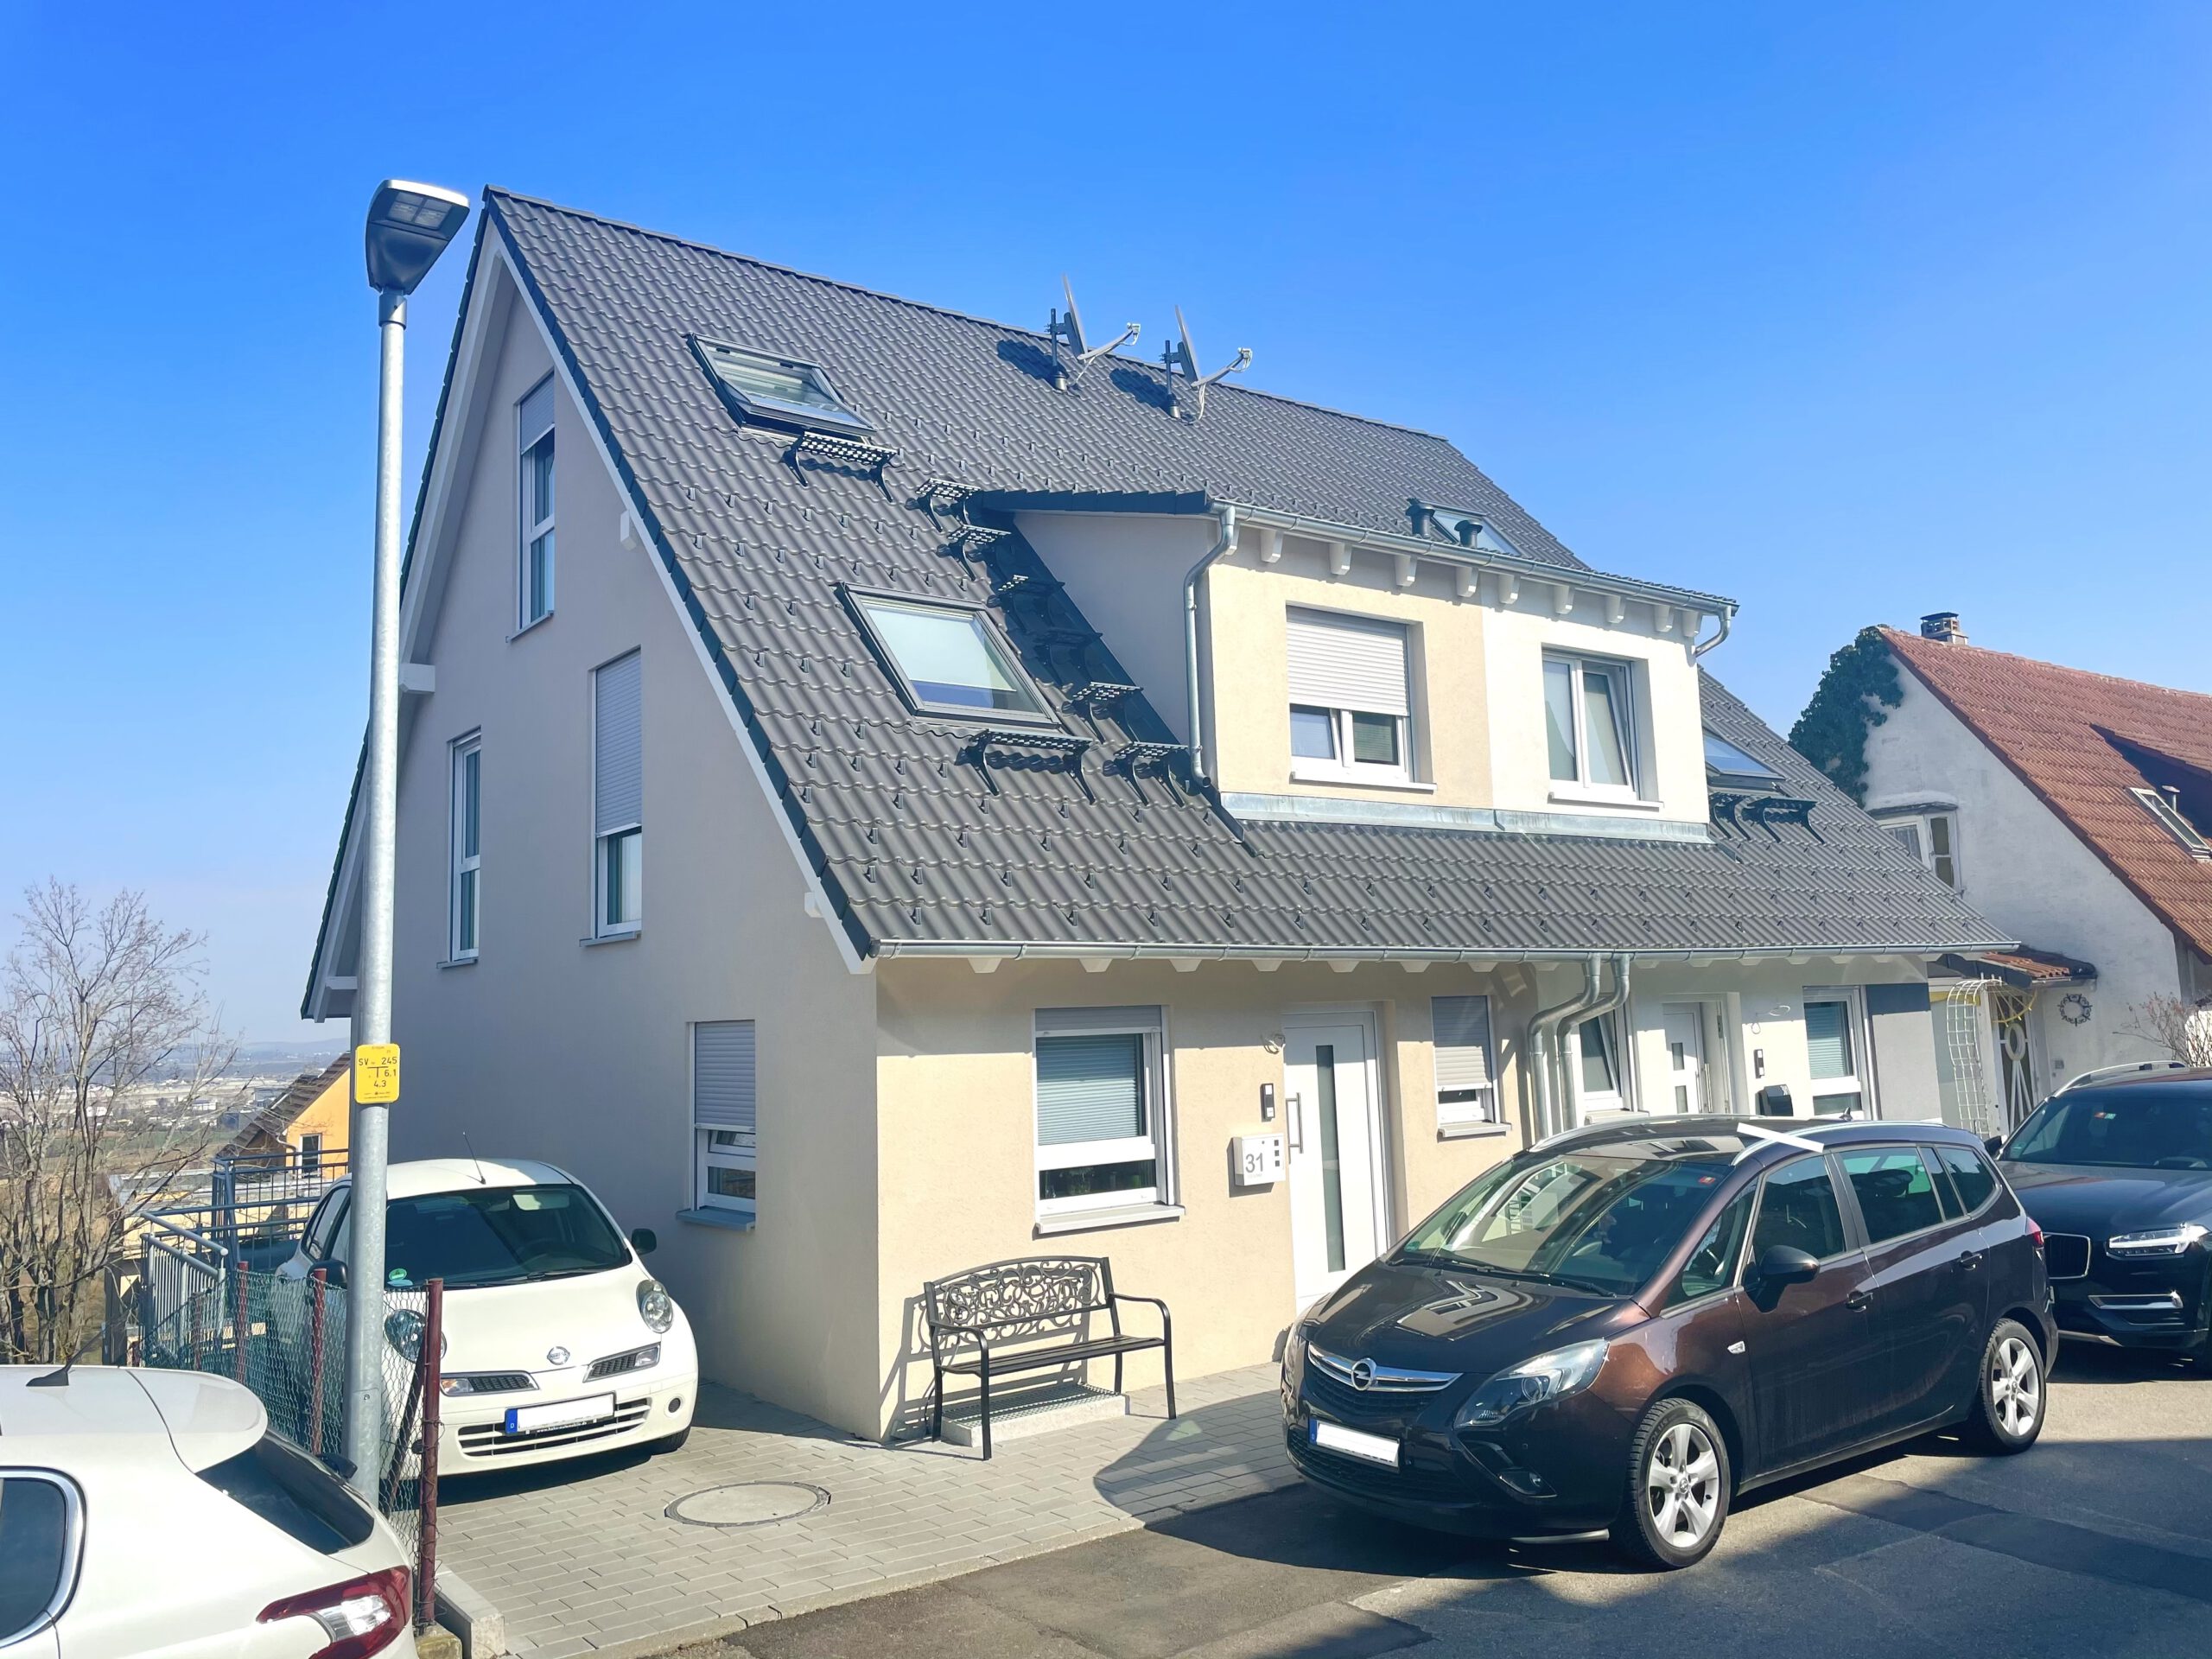 Zogjani Bauunternehmen - Referenz: Doppelhaus in Leinfelden-Echterdingen